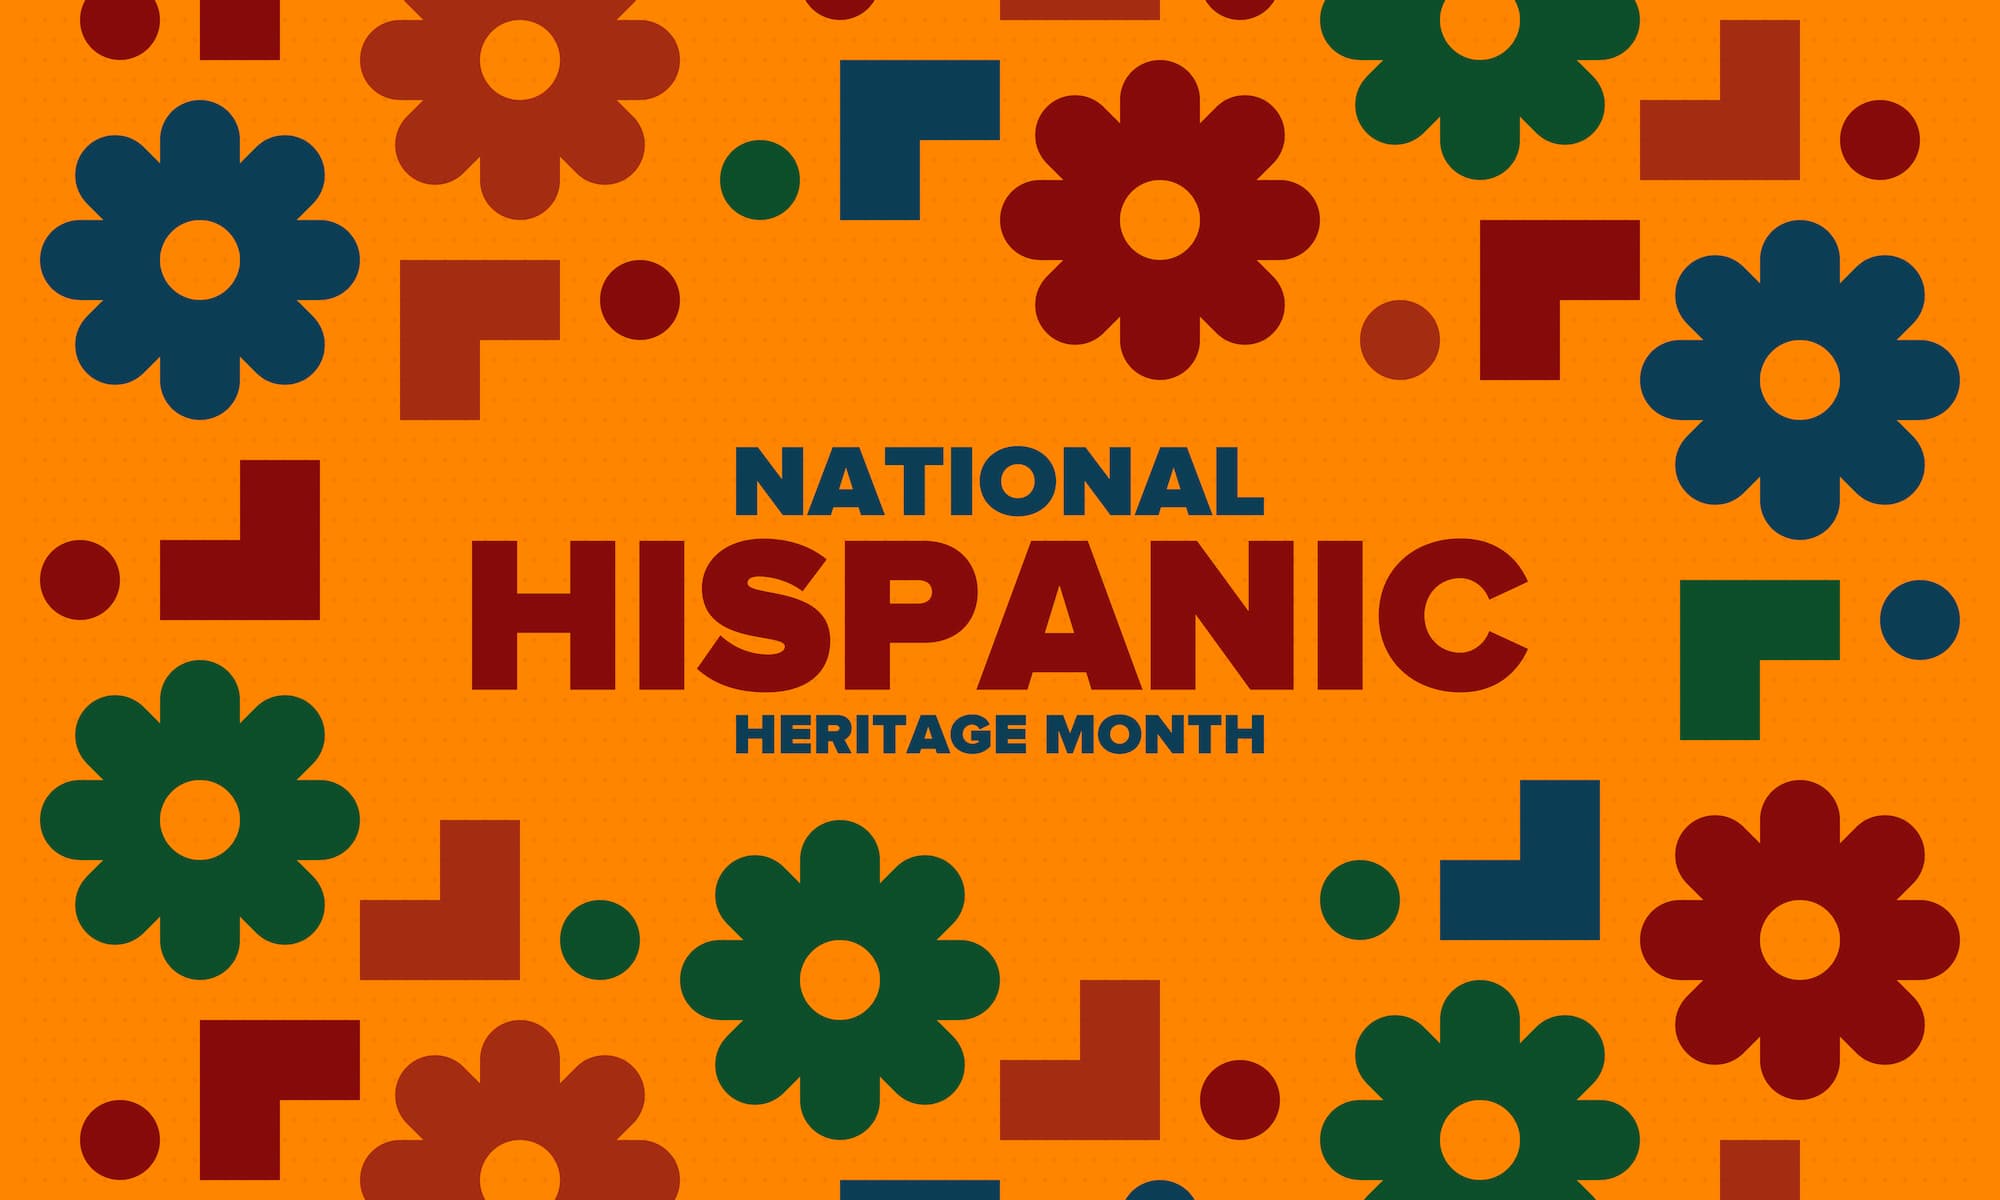 Celebrate Hispanic Heritage Month on Social Media